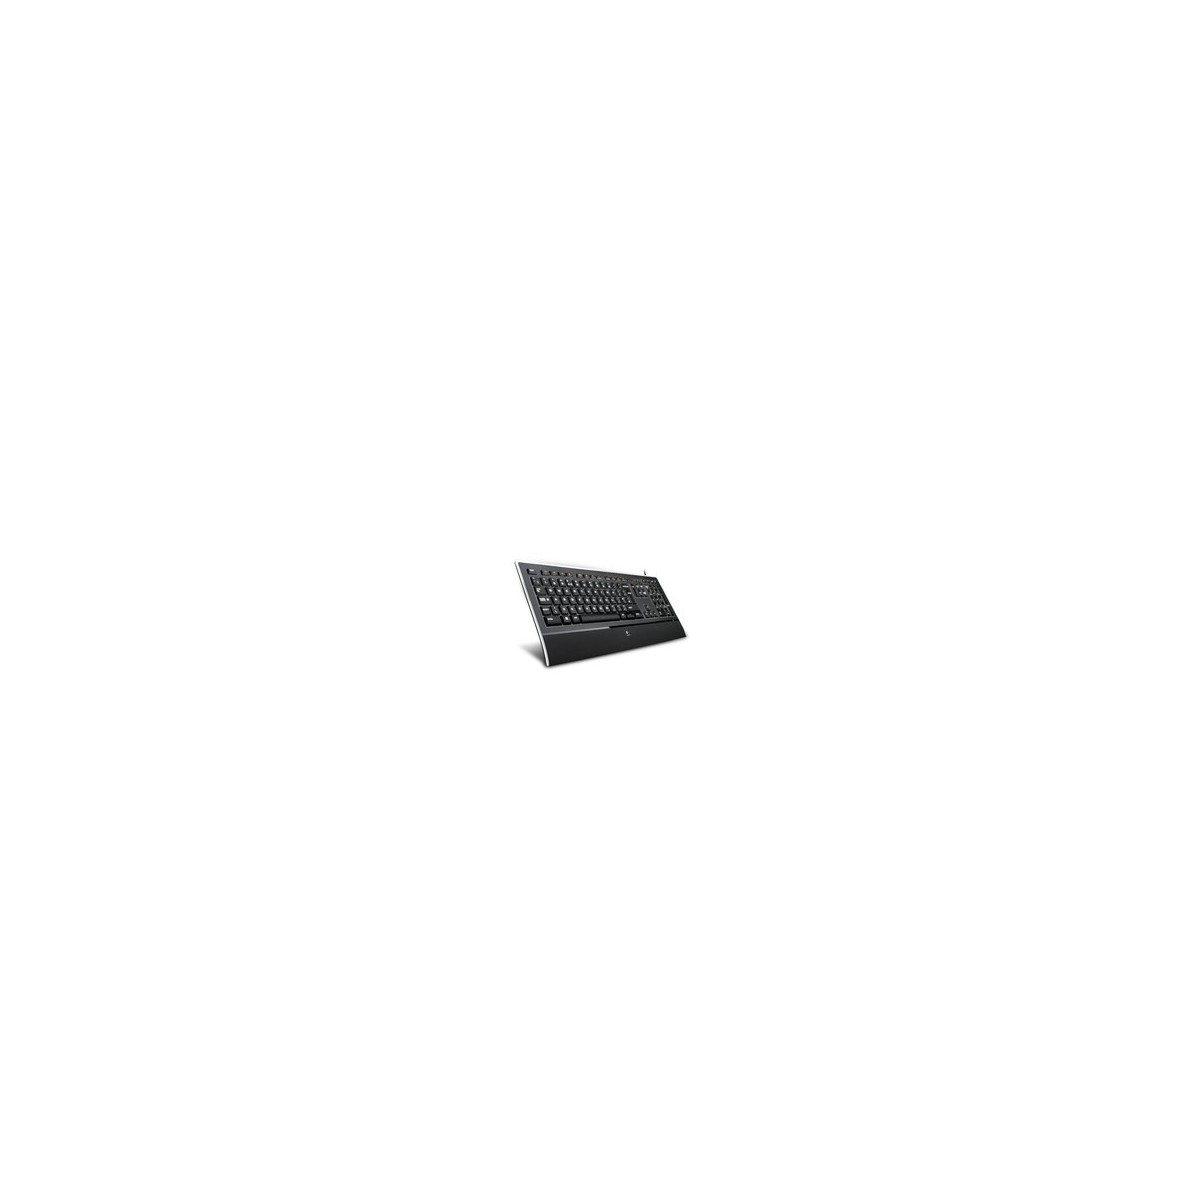 Logitech Illuminated Keyboard k740 - Full-size (100%) - Wired - USB - QWERTY - Black